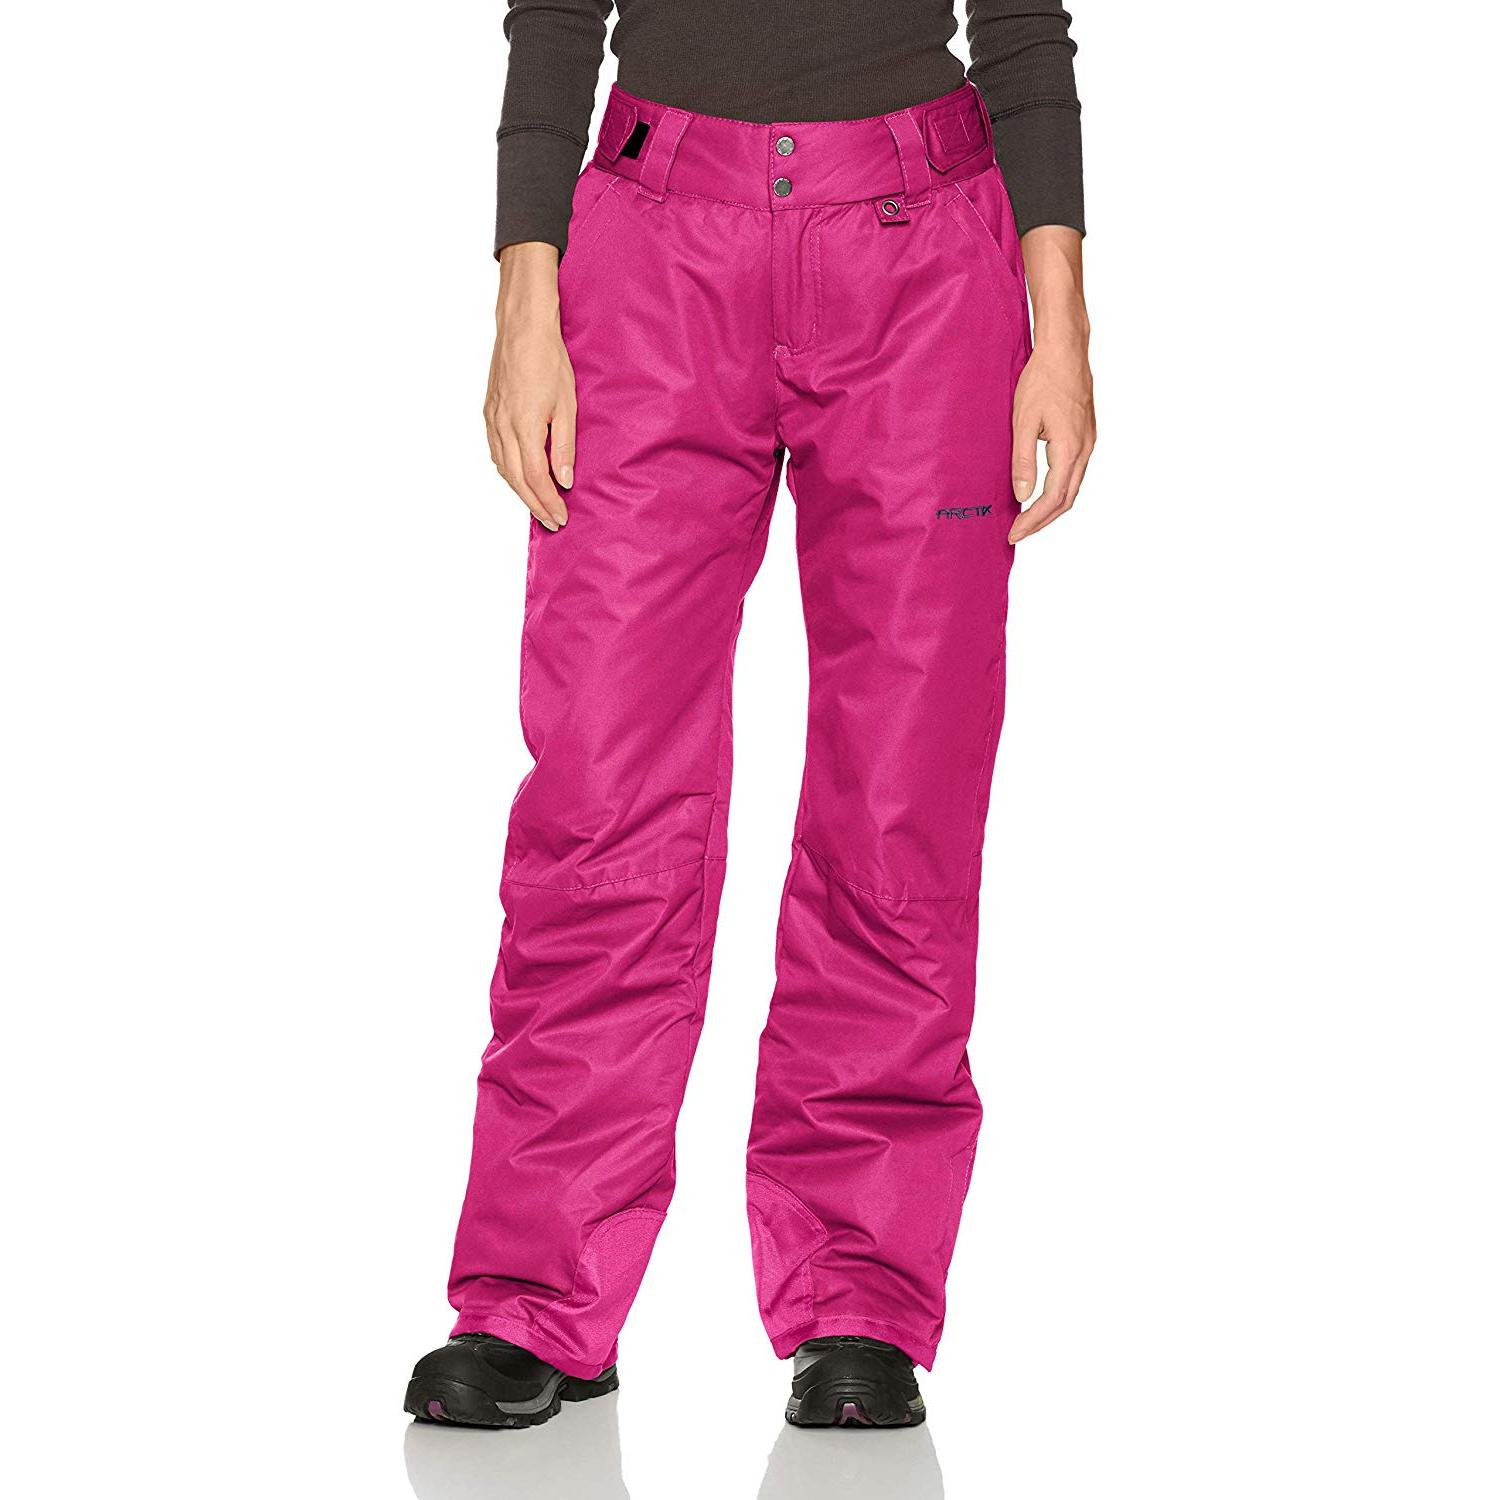 Arctix Women's Snow Sports Insulated Cargo Pants, Steel Melange, X-Large